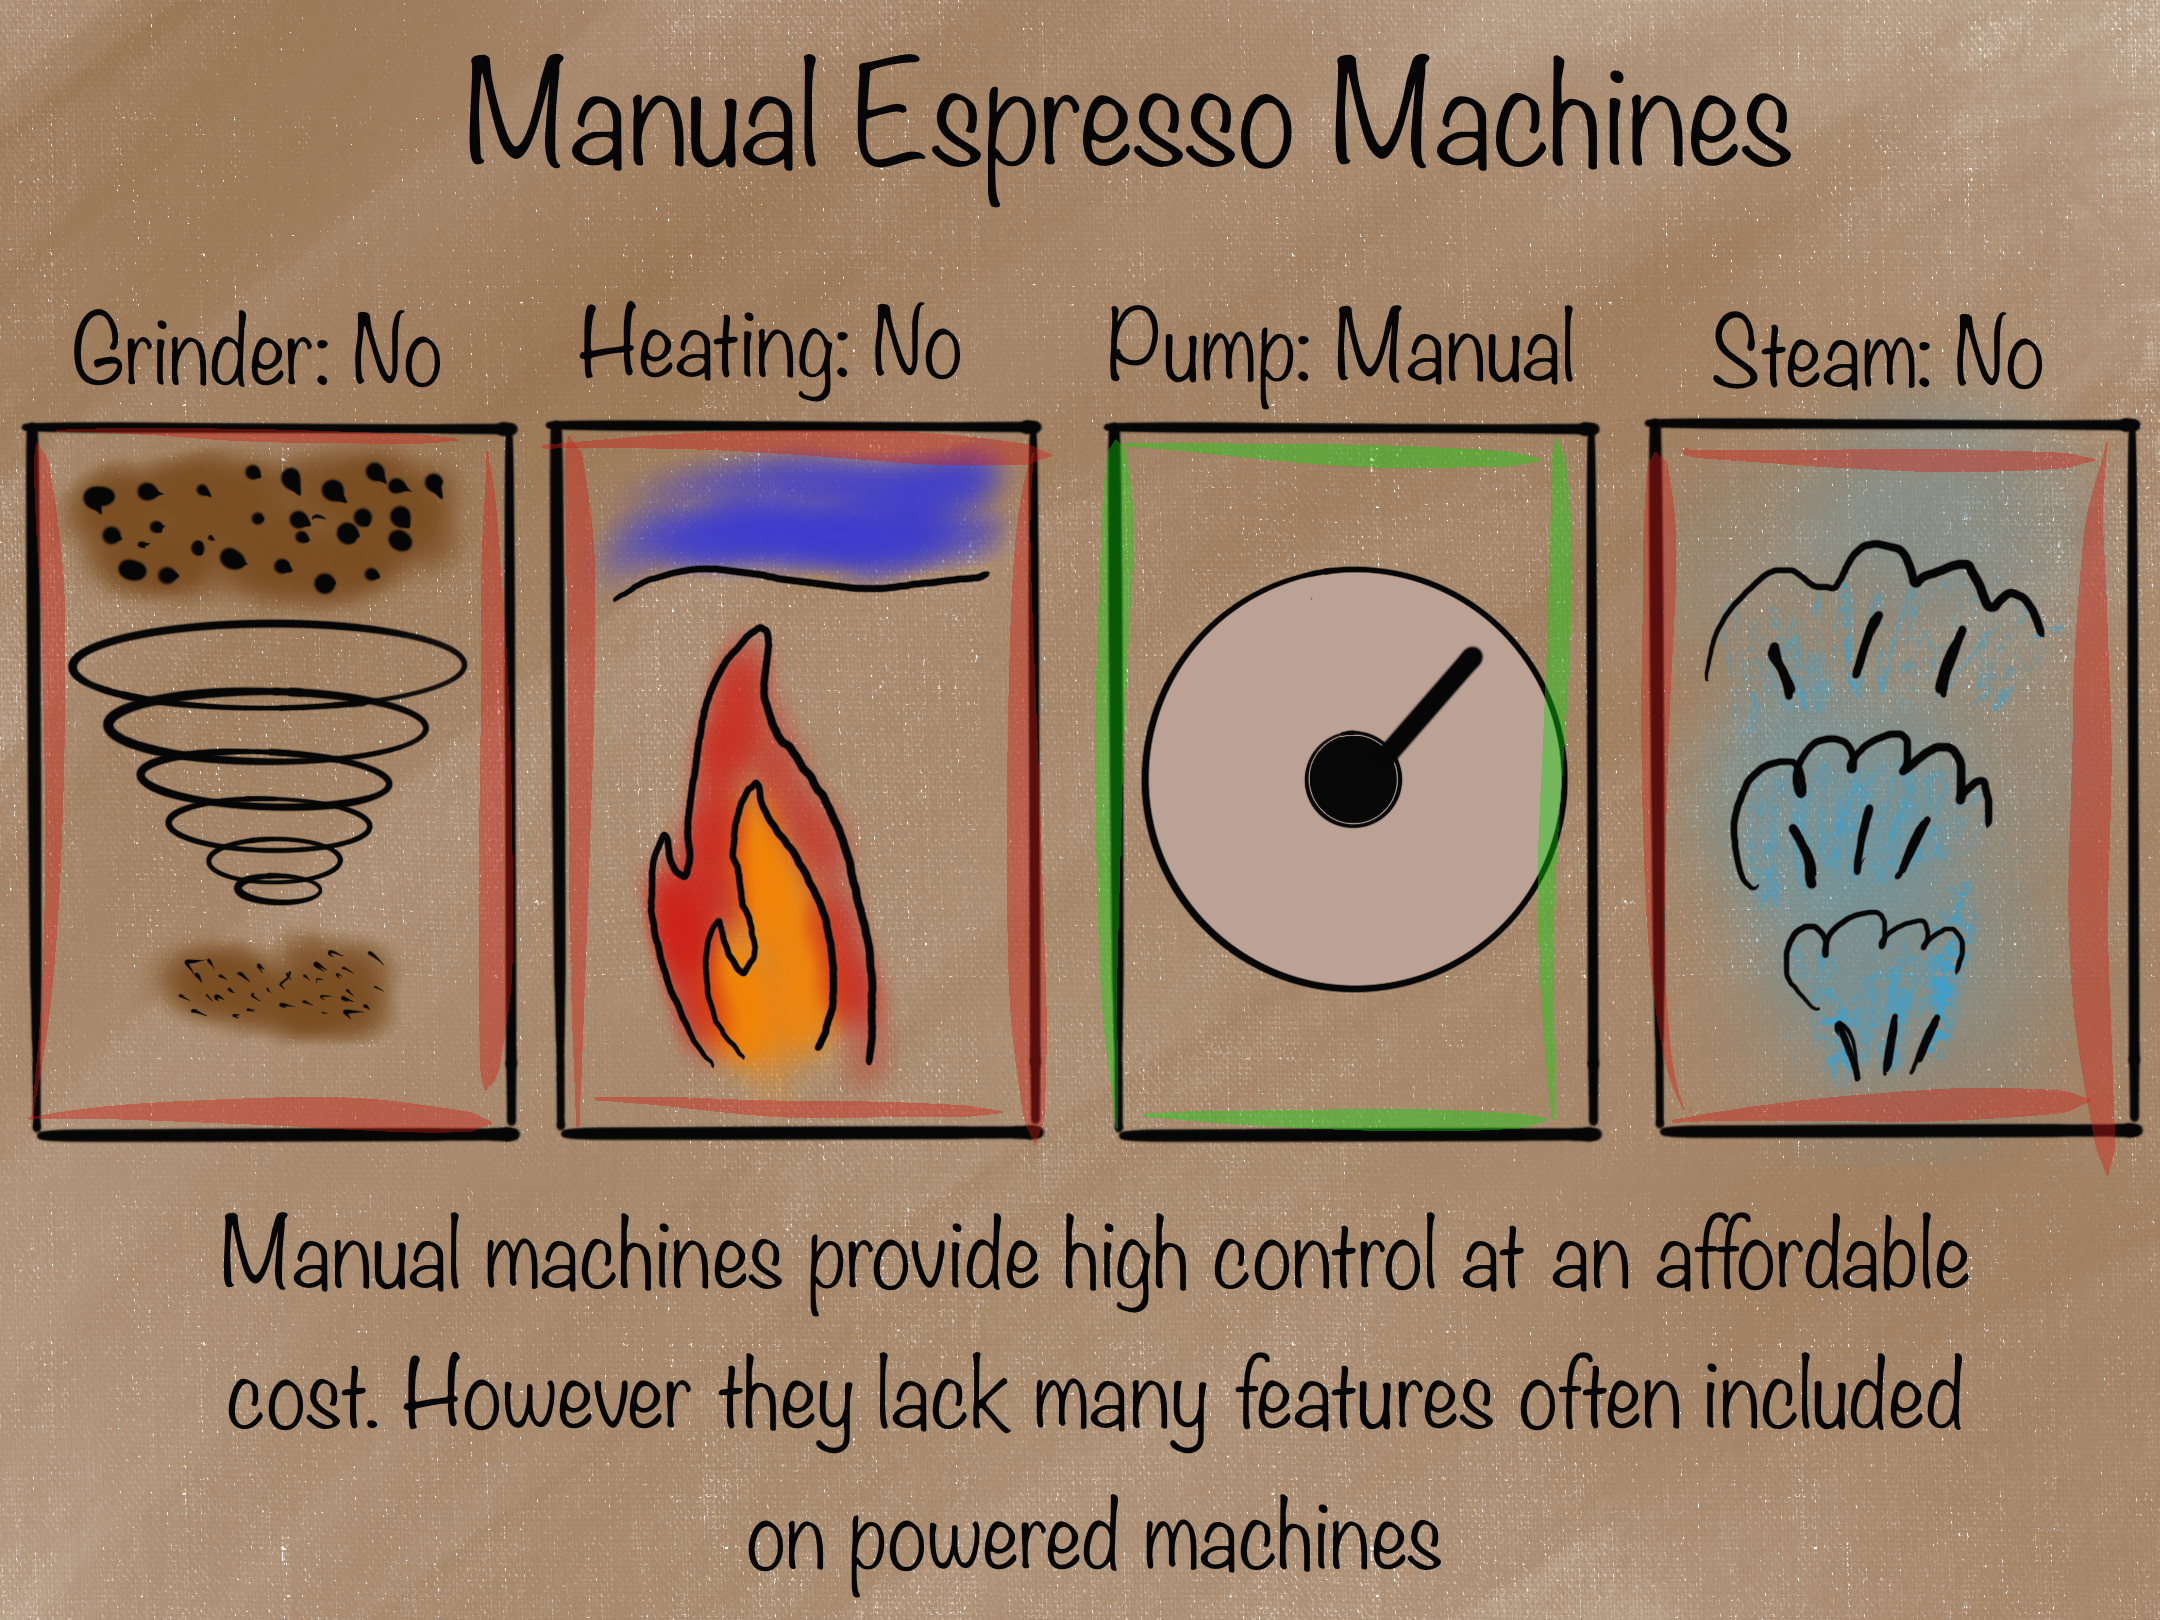 Manual Espresso Machine Overview